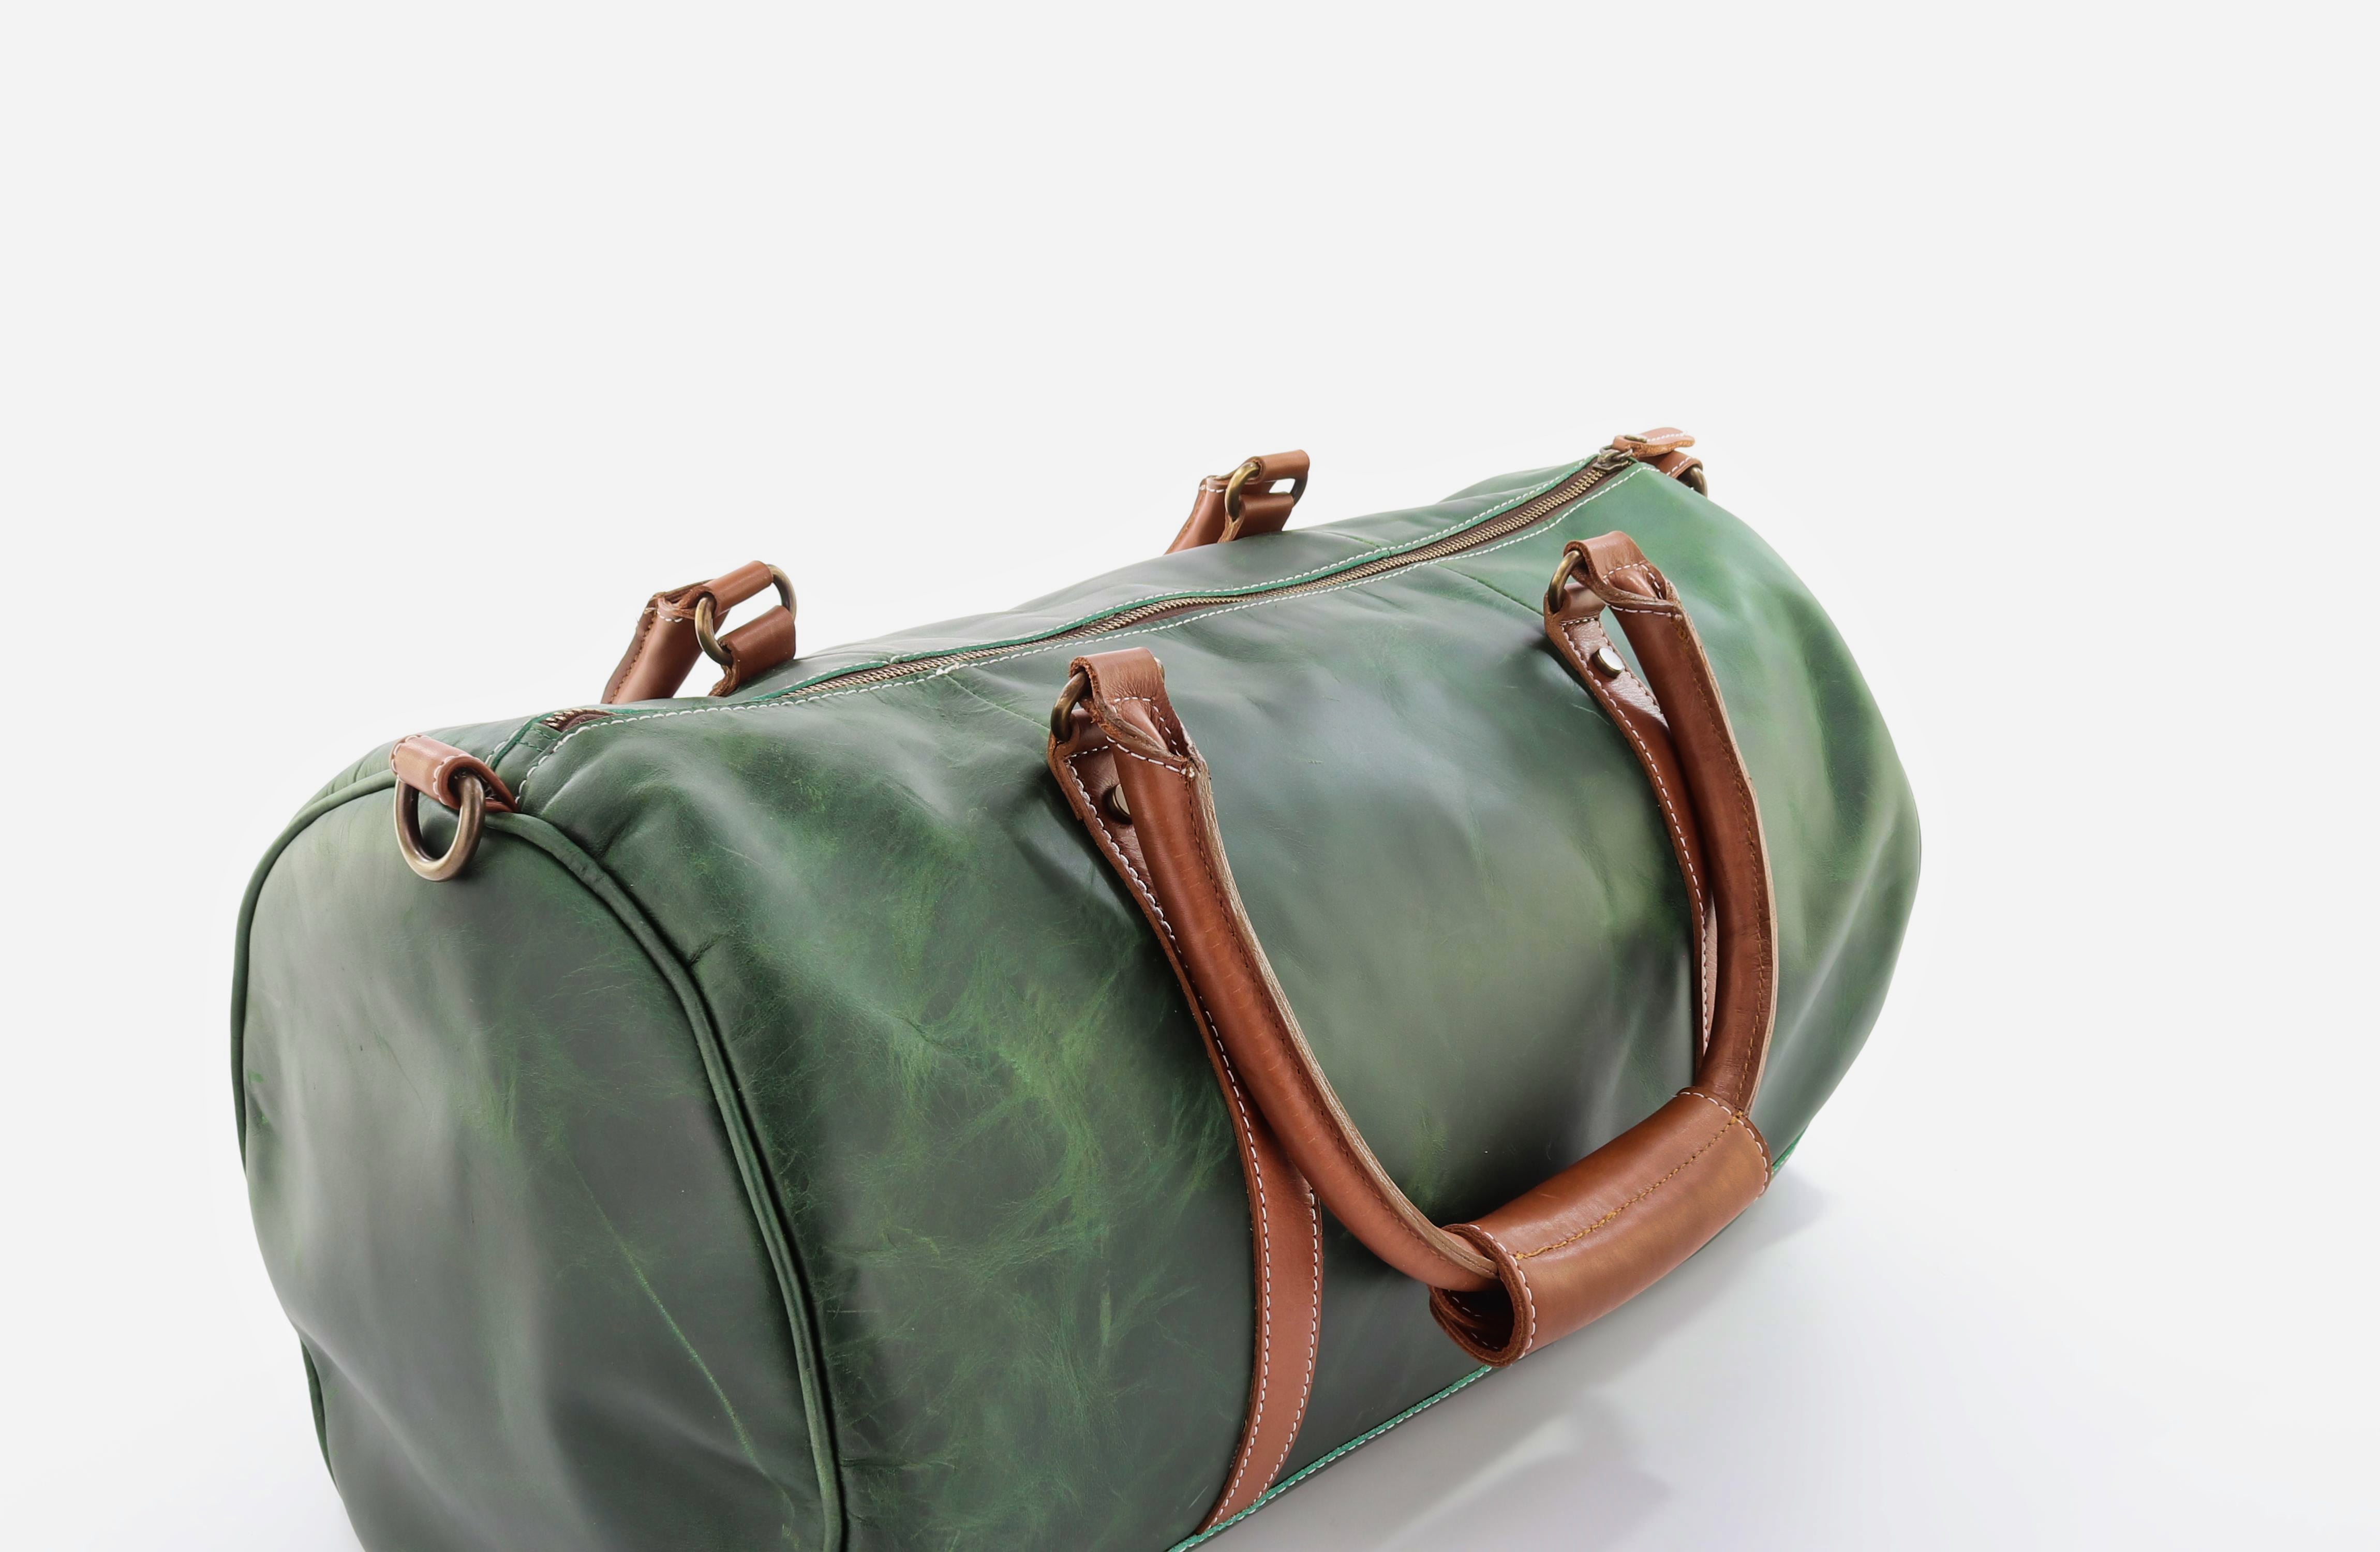 Smaragdgrüne Reisetasche